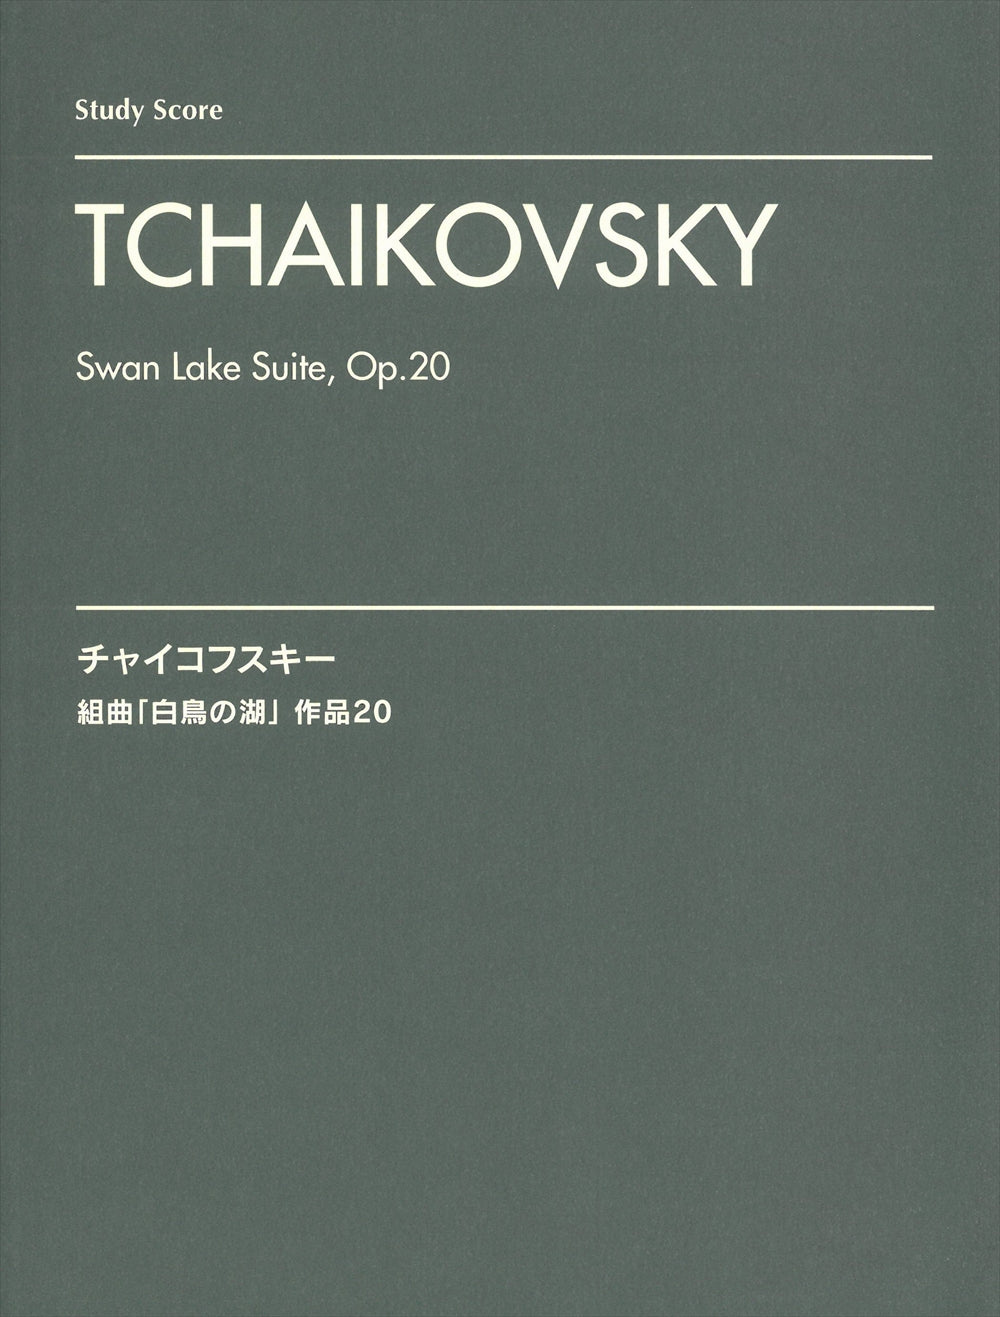 Swan Lake Suite, Op.20(Study Score) - 組曲「白鳥の湖」作品20